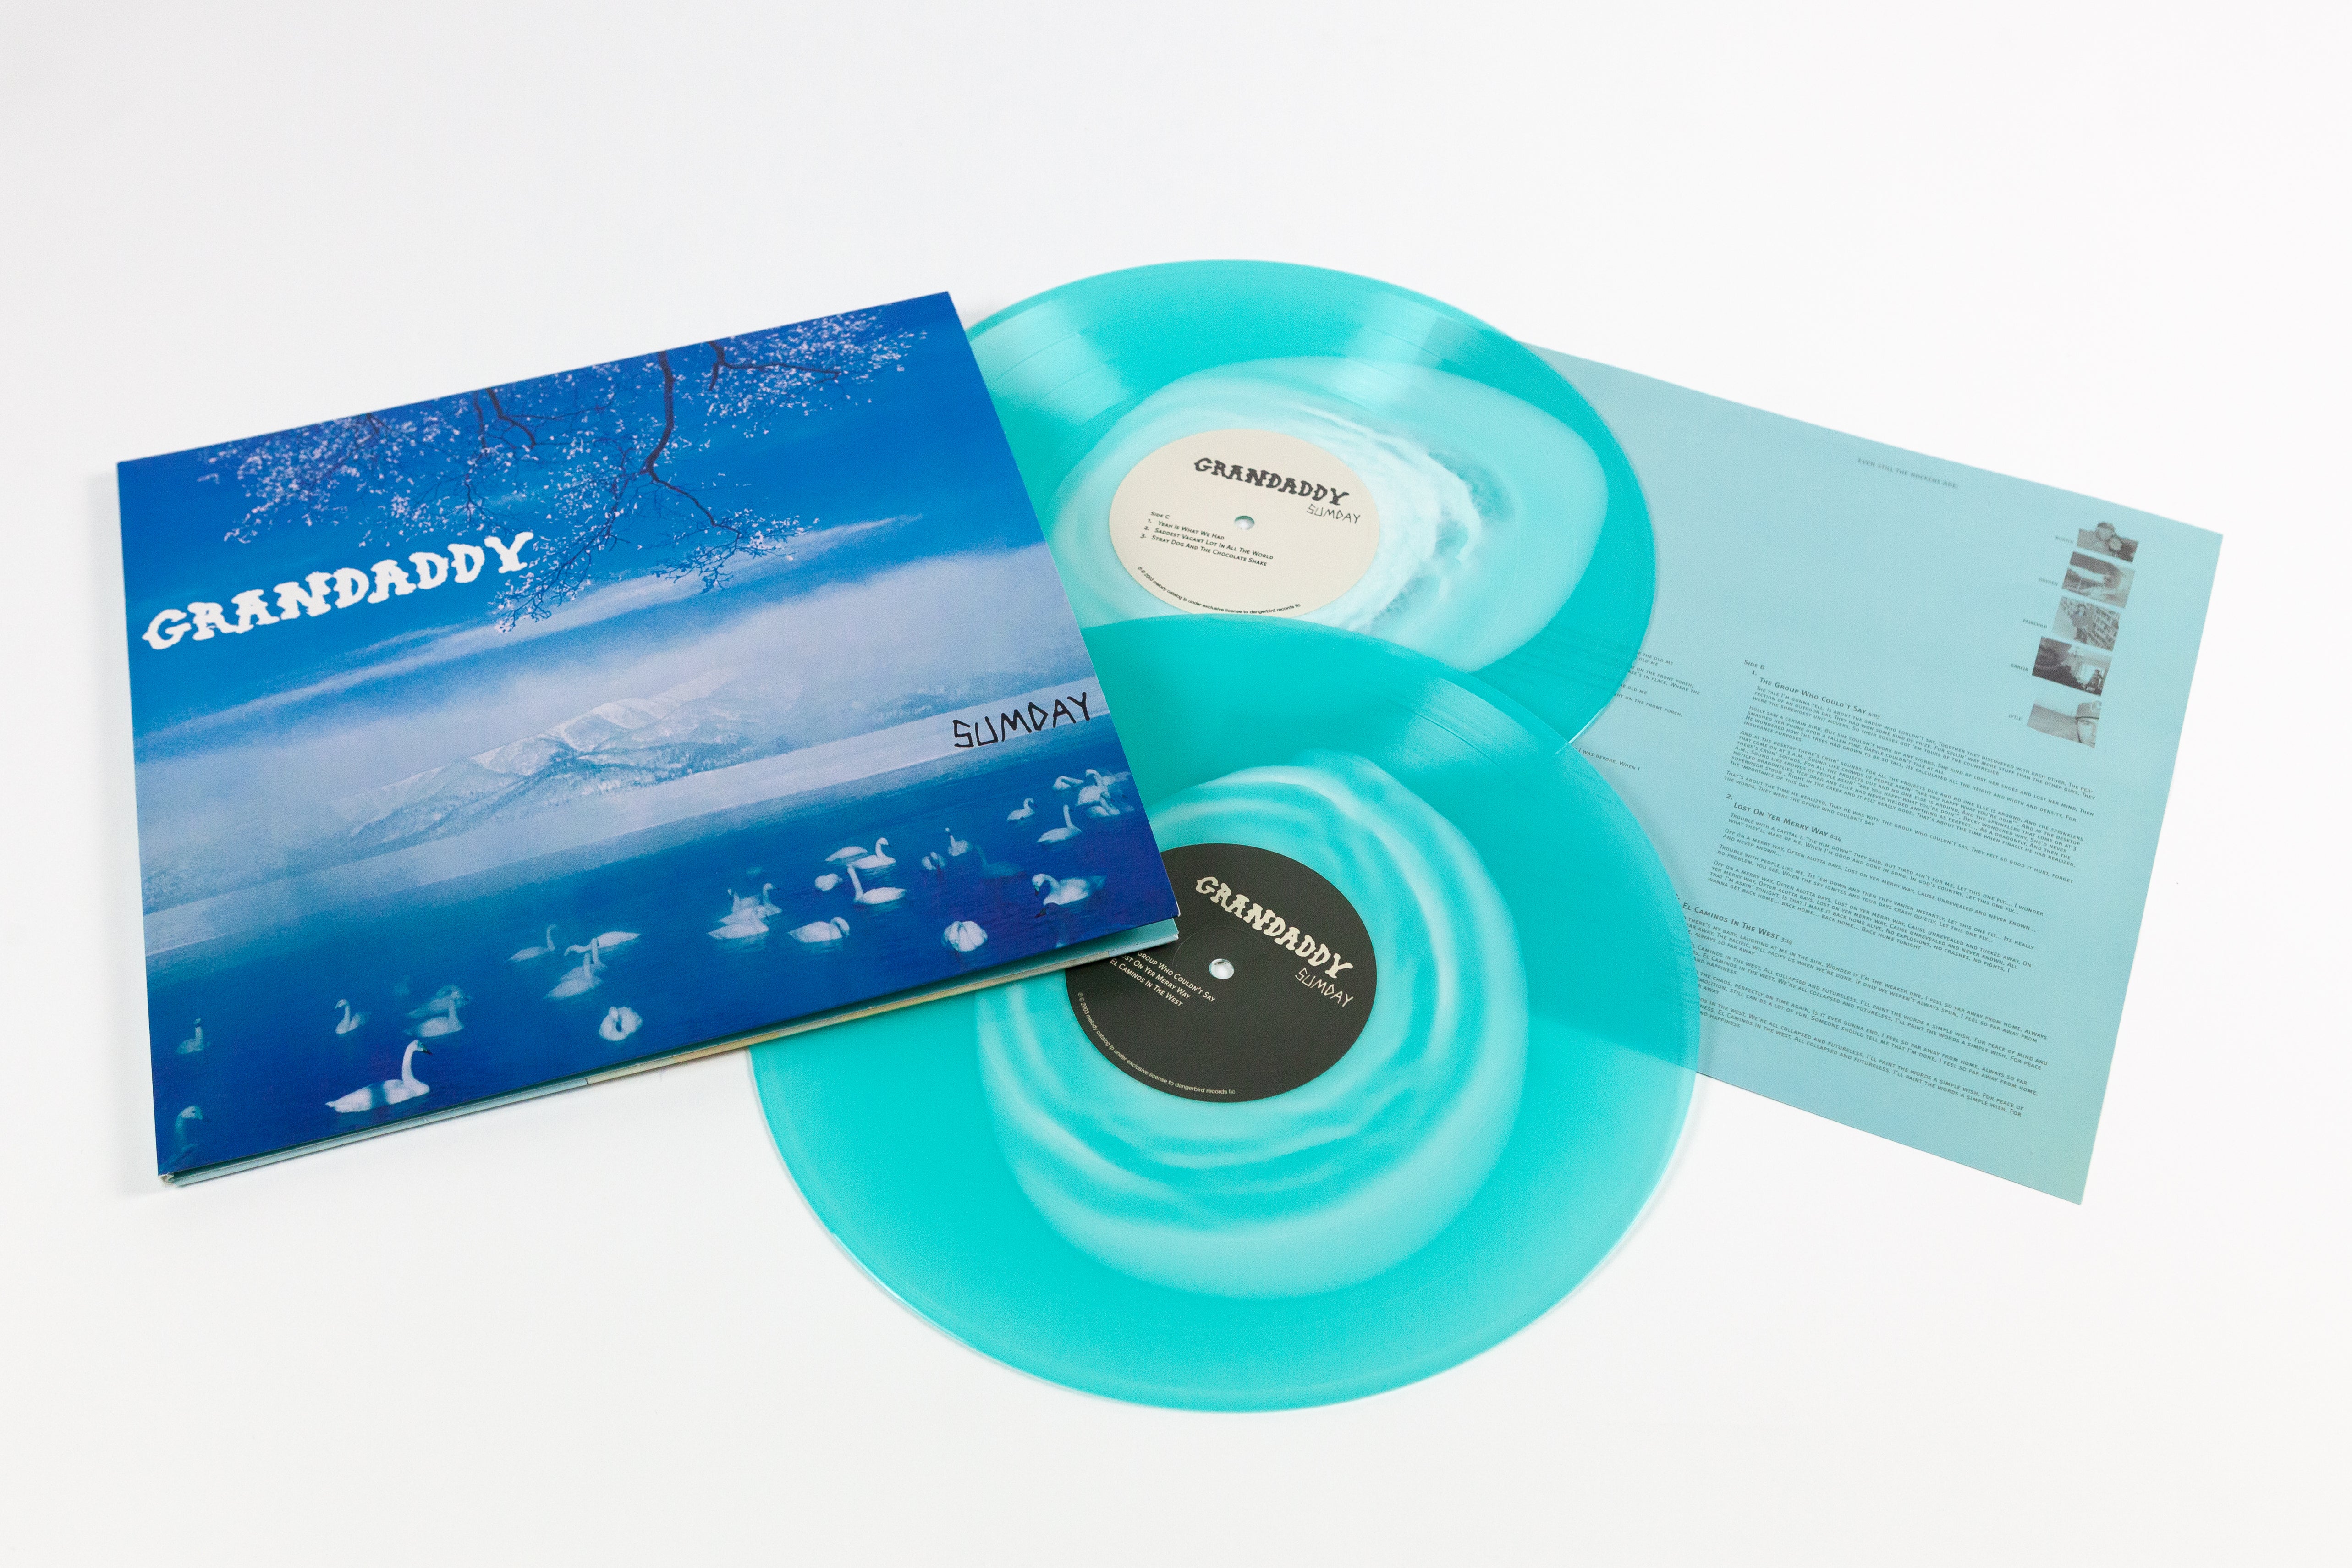 Grandaddy - Sumday - Double Vinyl LP (Wiper Fluid Blue)